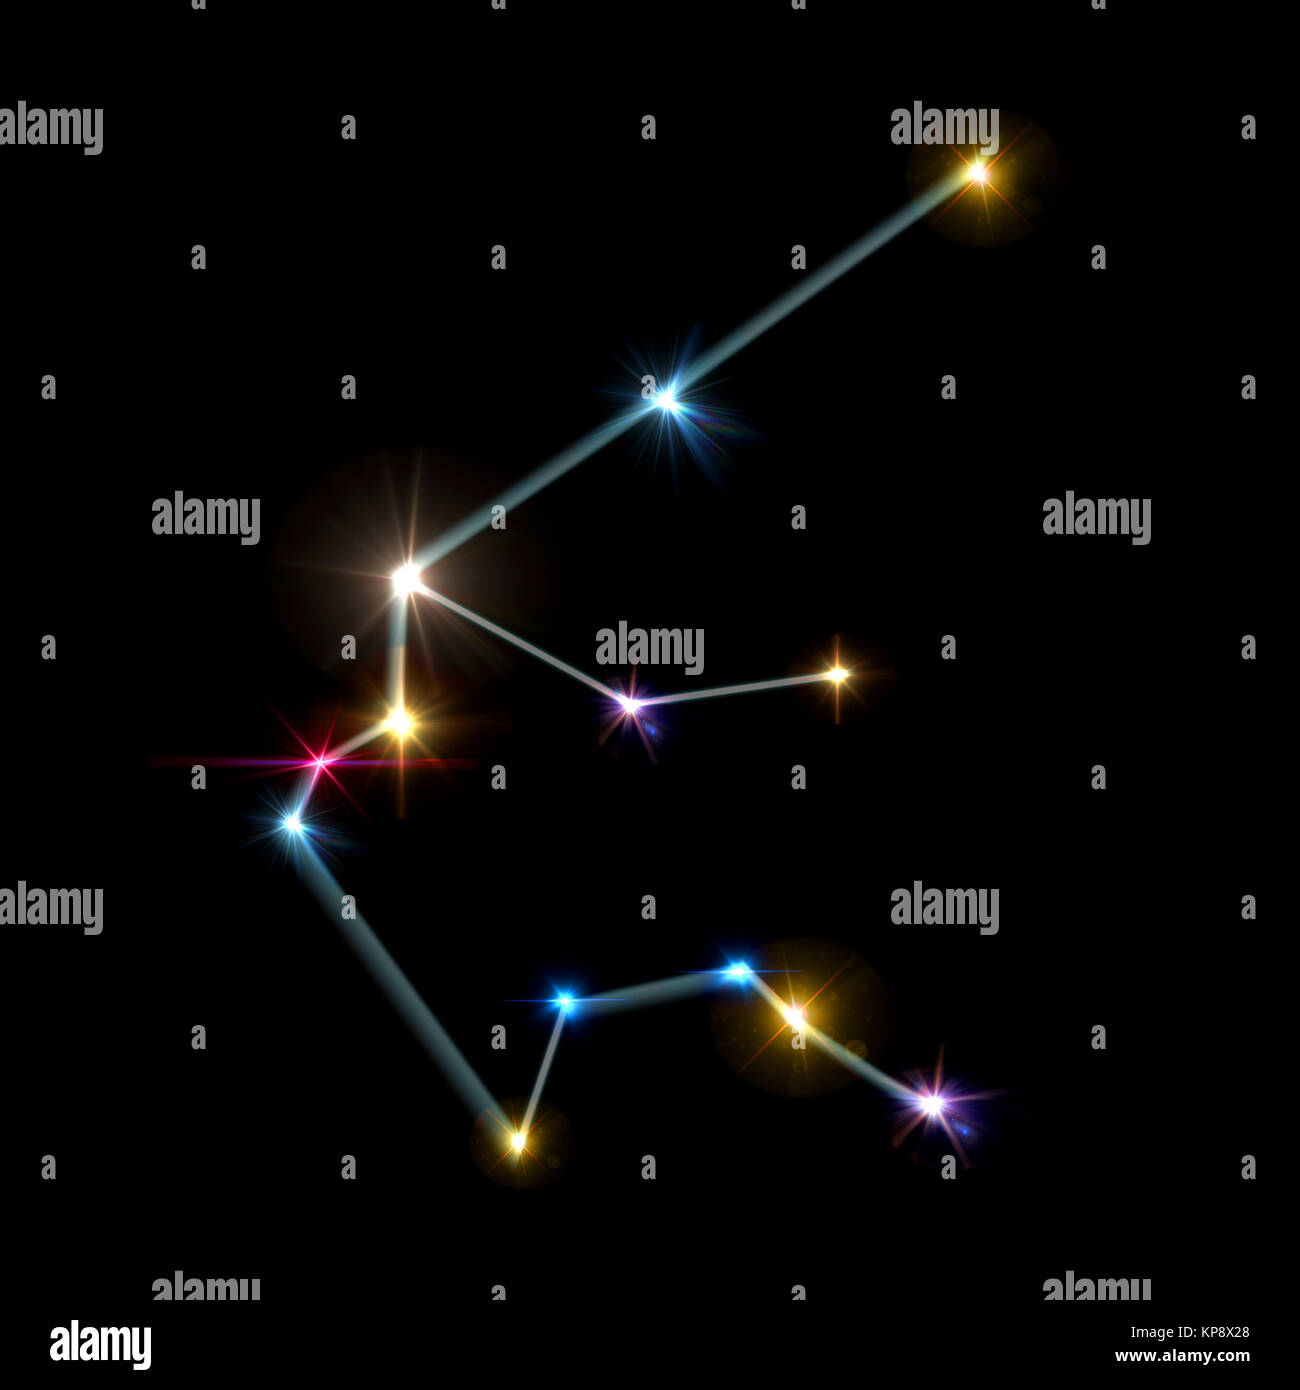 11 Aquarius Horoscopes with black background Stock Photo